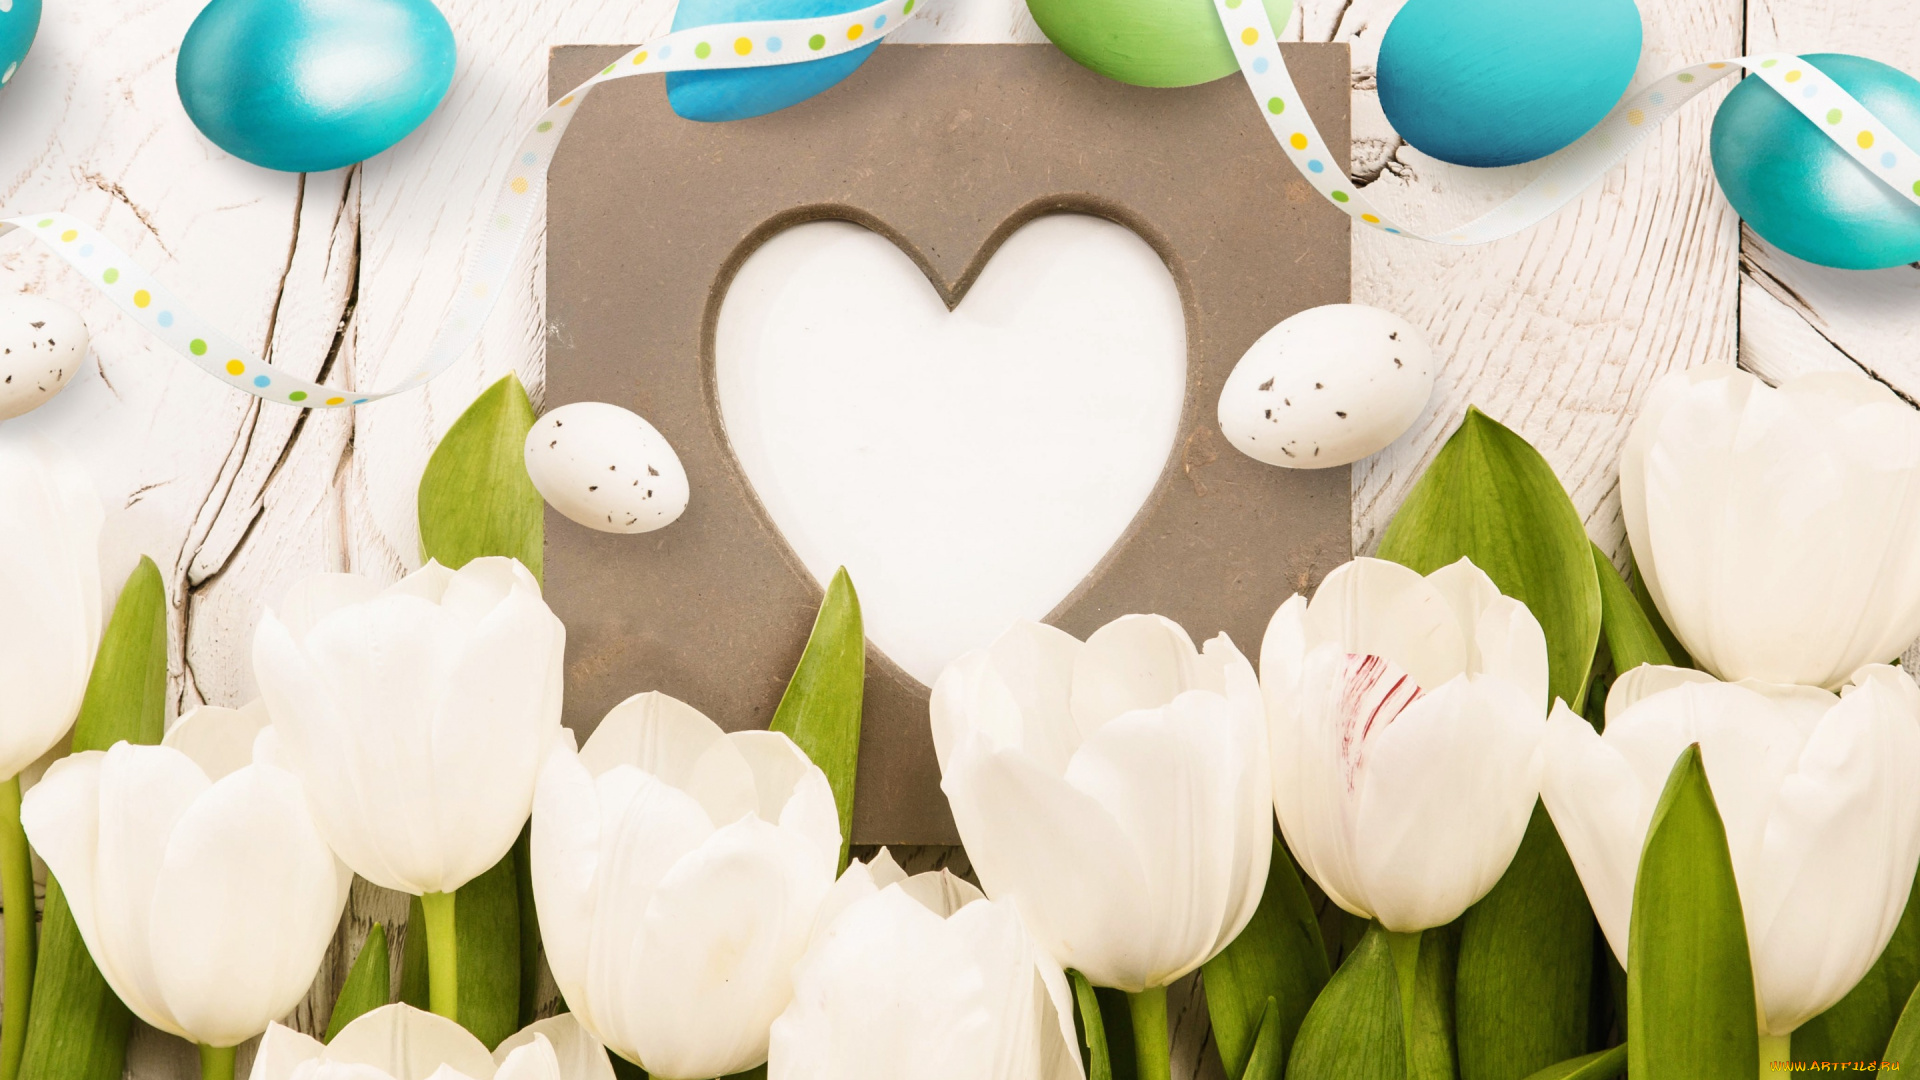 праздничные, пасха, яйца, крашеные, wood, easter, тюльпаны, tulips, сердечки, hearts, happy, decoration, весна, цветы, spring, flowers, eggs